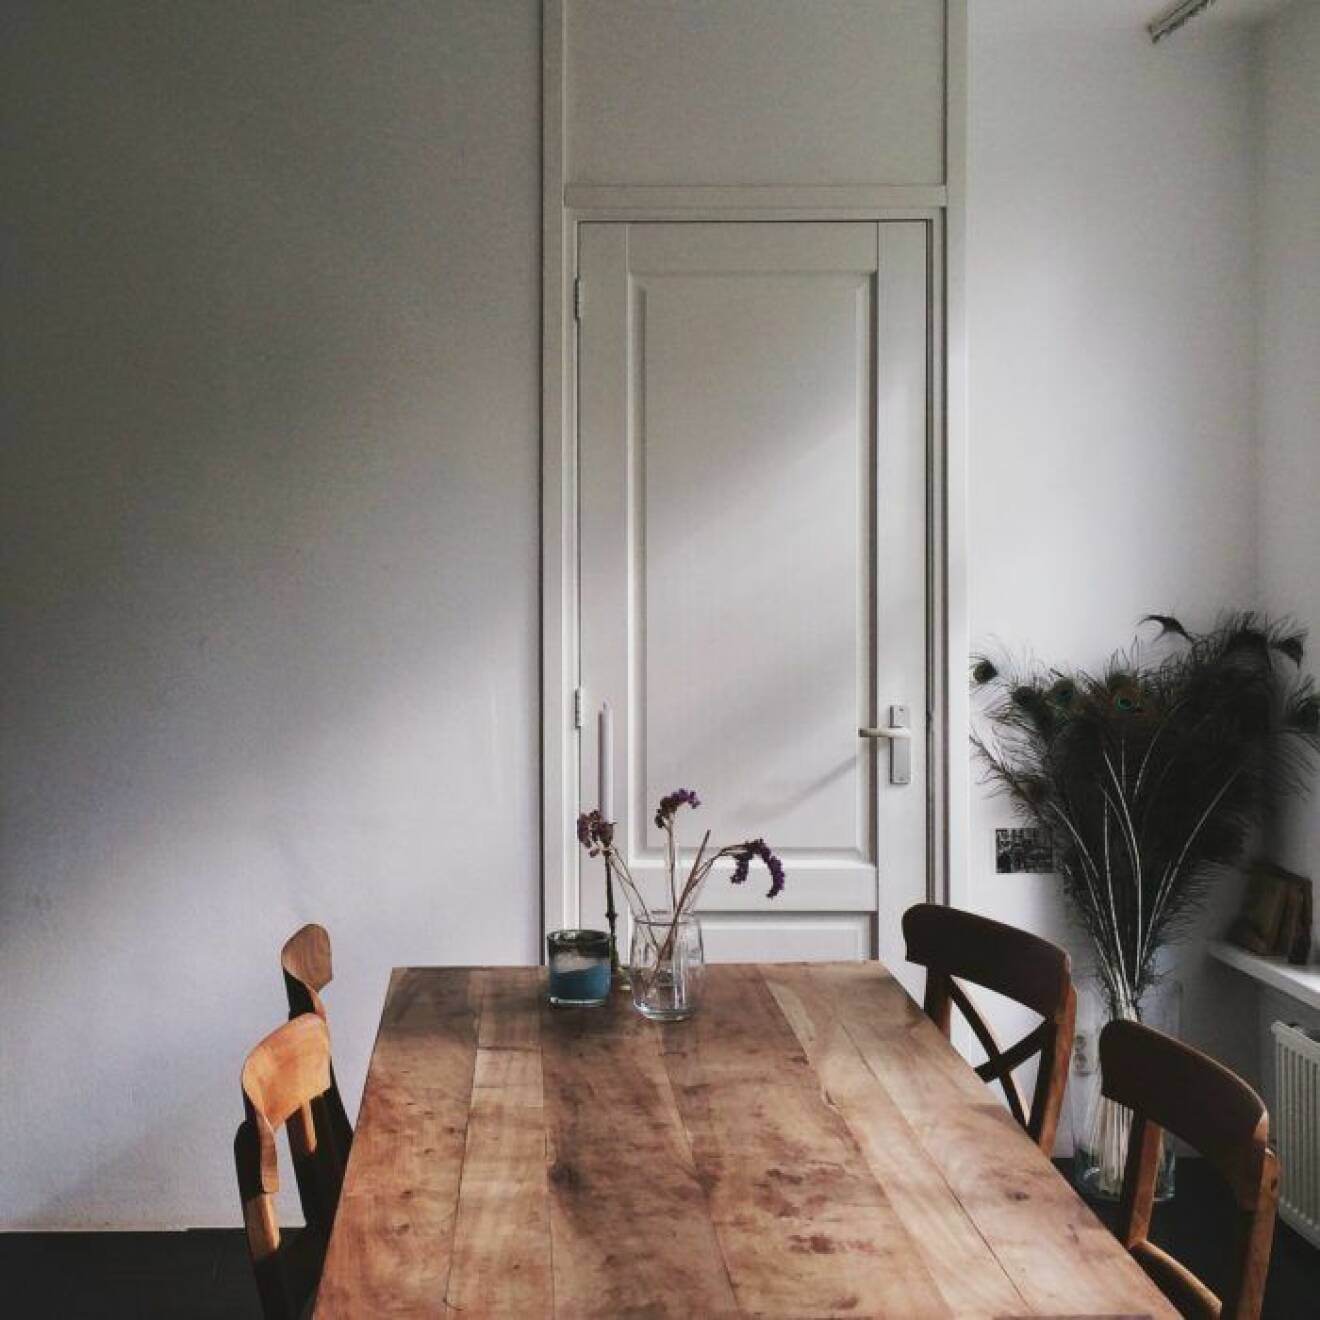 Stockhomsbaserade fotografen Louise Ljungbergs instagramkonto 